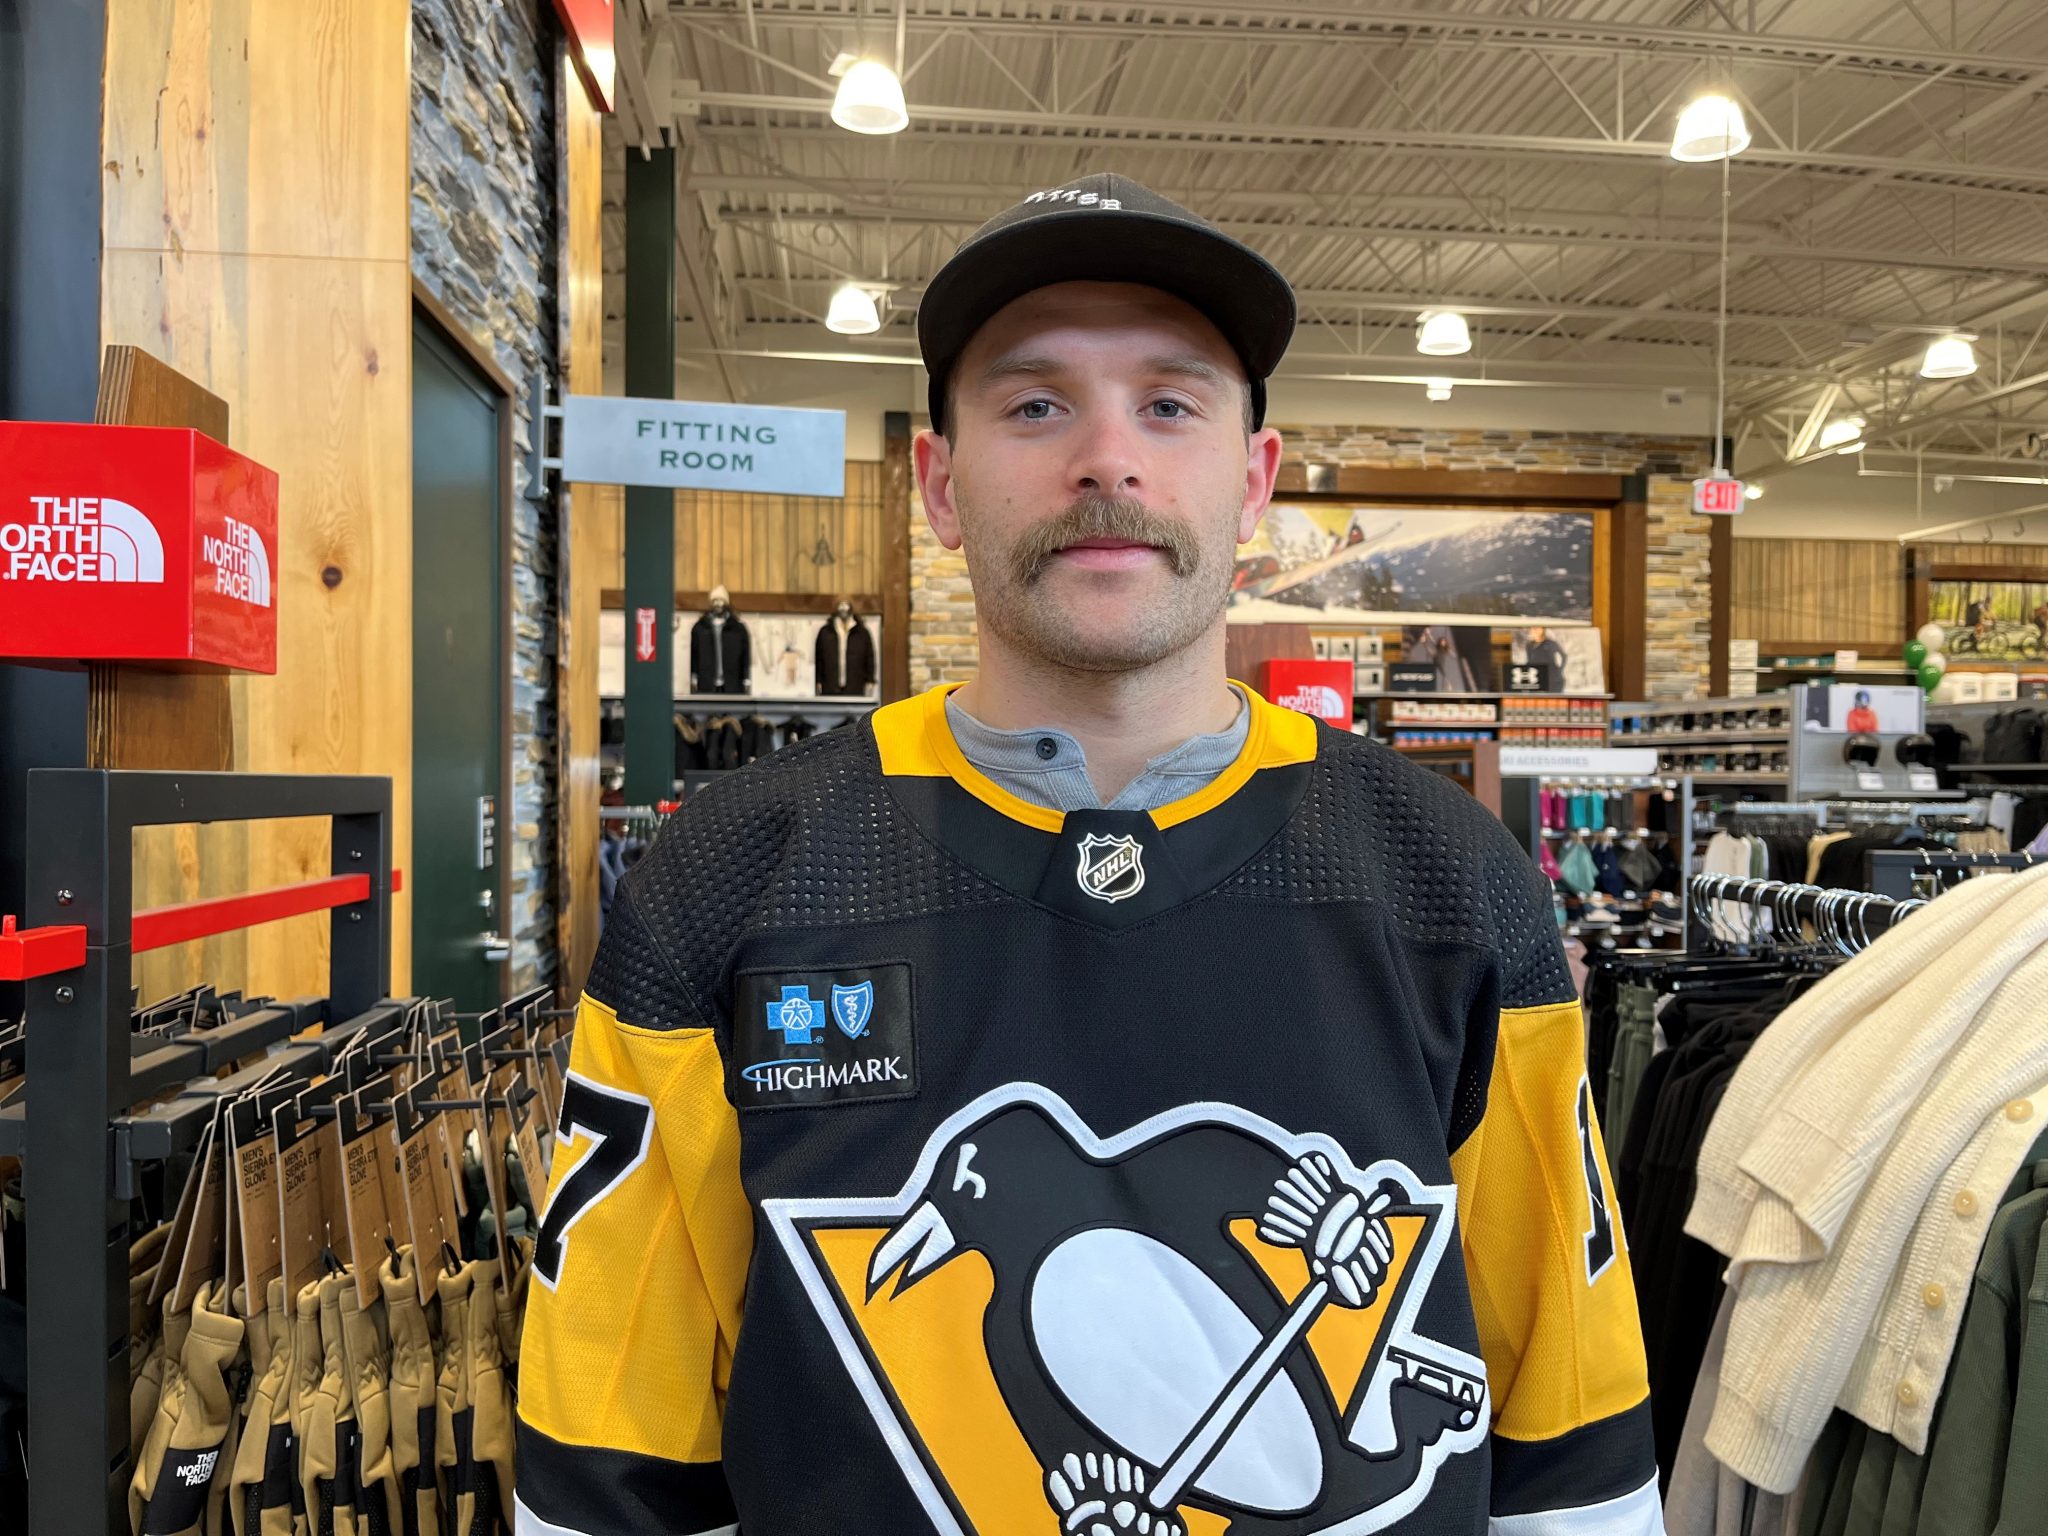 NHL Men's Pittsburgh Penguins Bryan Rust #17 Black Player T-Shirt